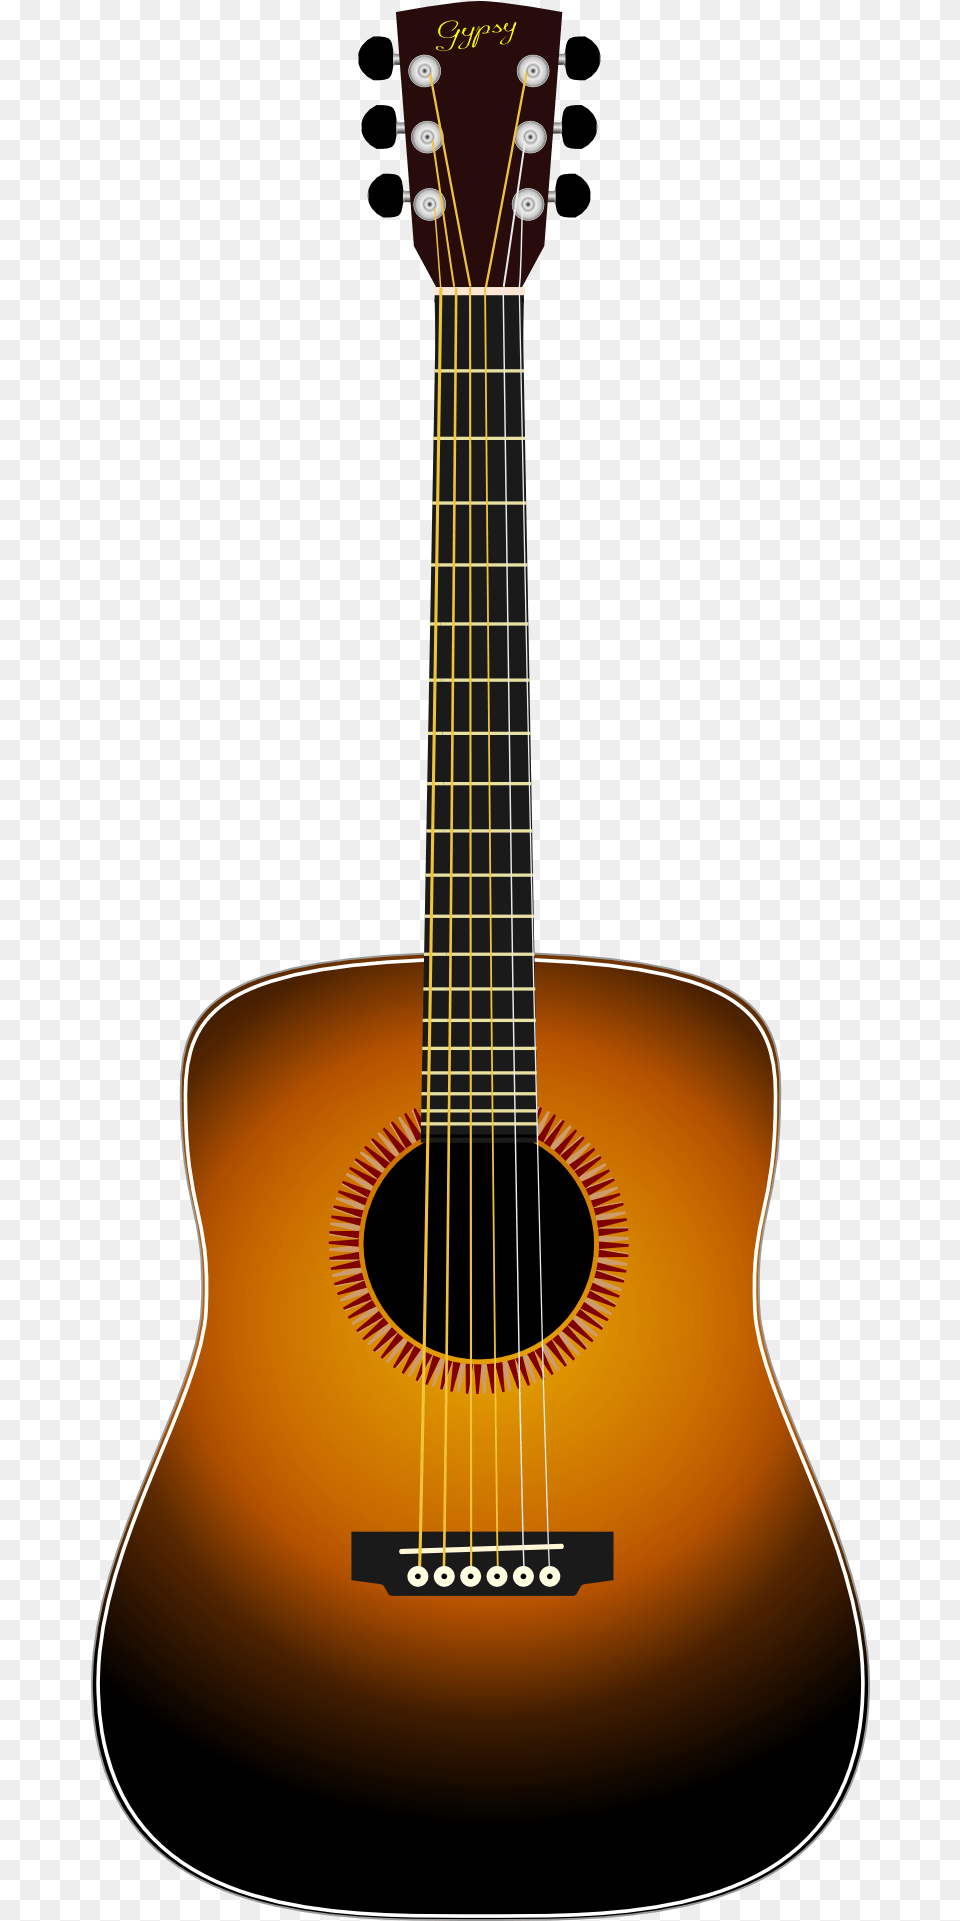 Transparent Guitar Drawing Acoustic Guitar Brown Guitar, Musical Instrument, Bass Guitar Png